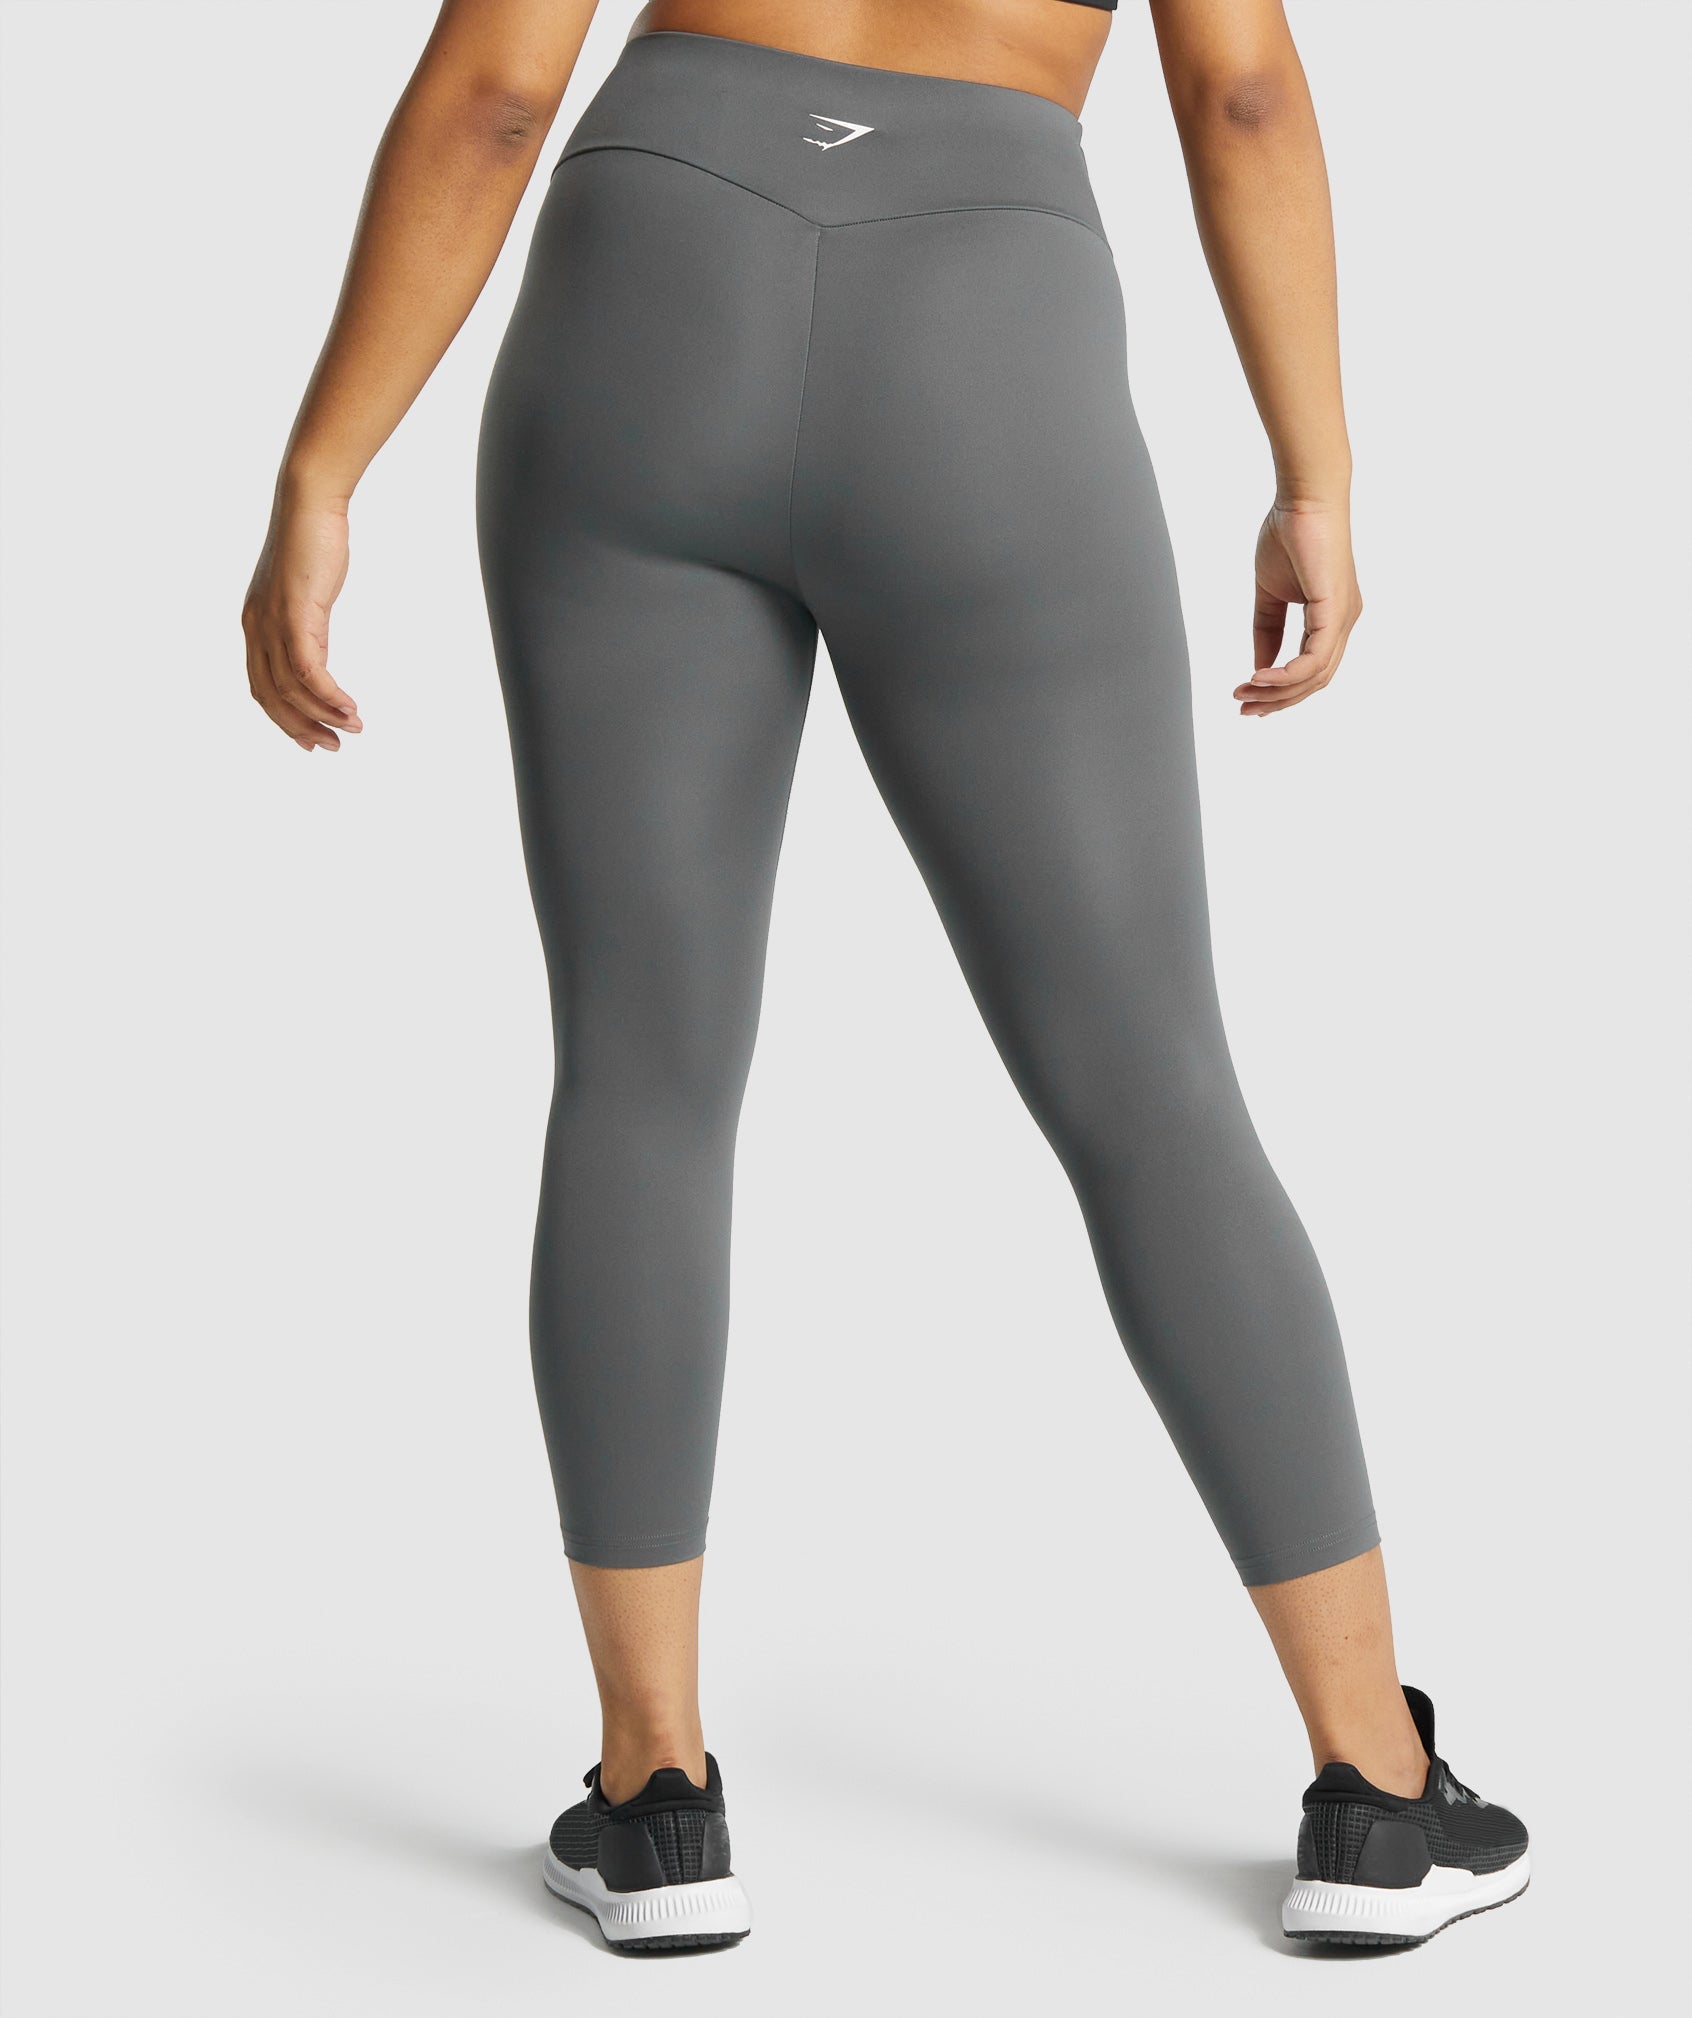 LAB360° Colour Block Leggings - Charcoal Grey | Workout Leggings Women